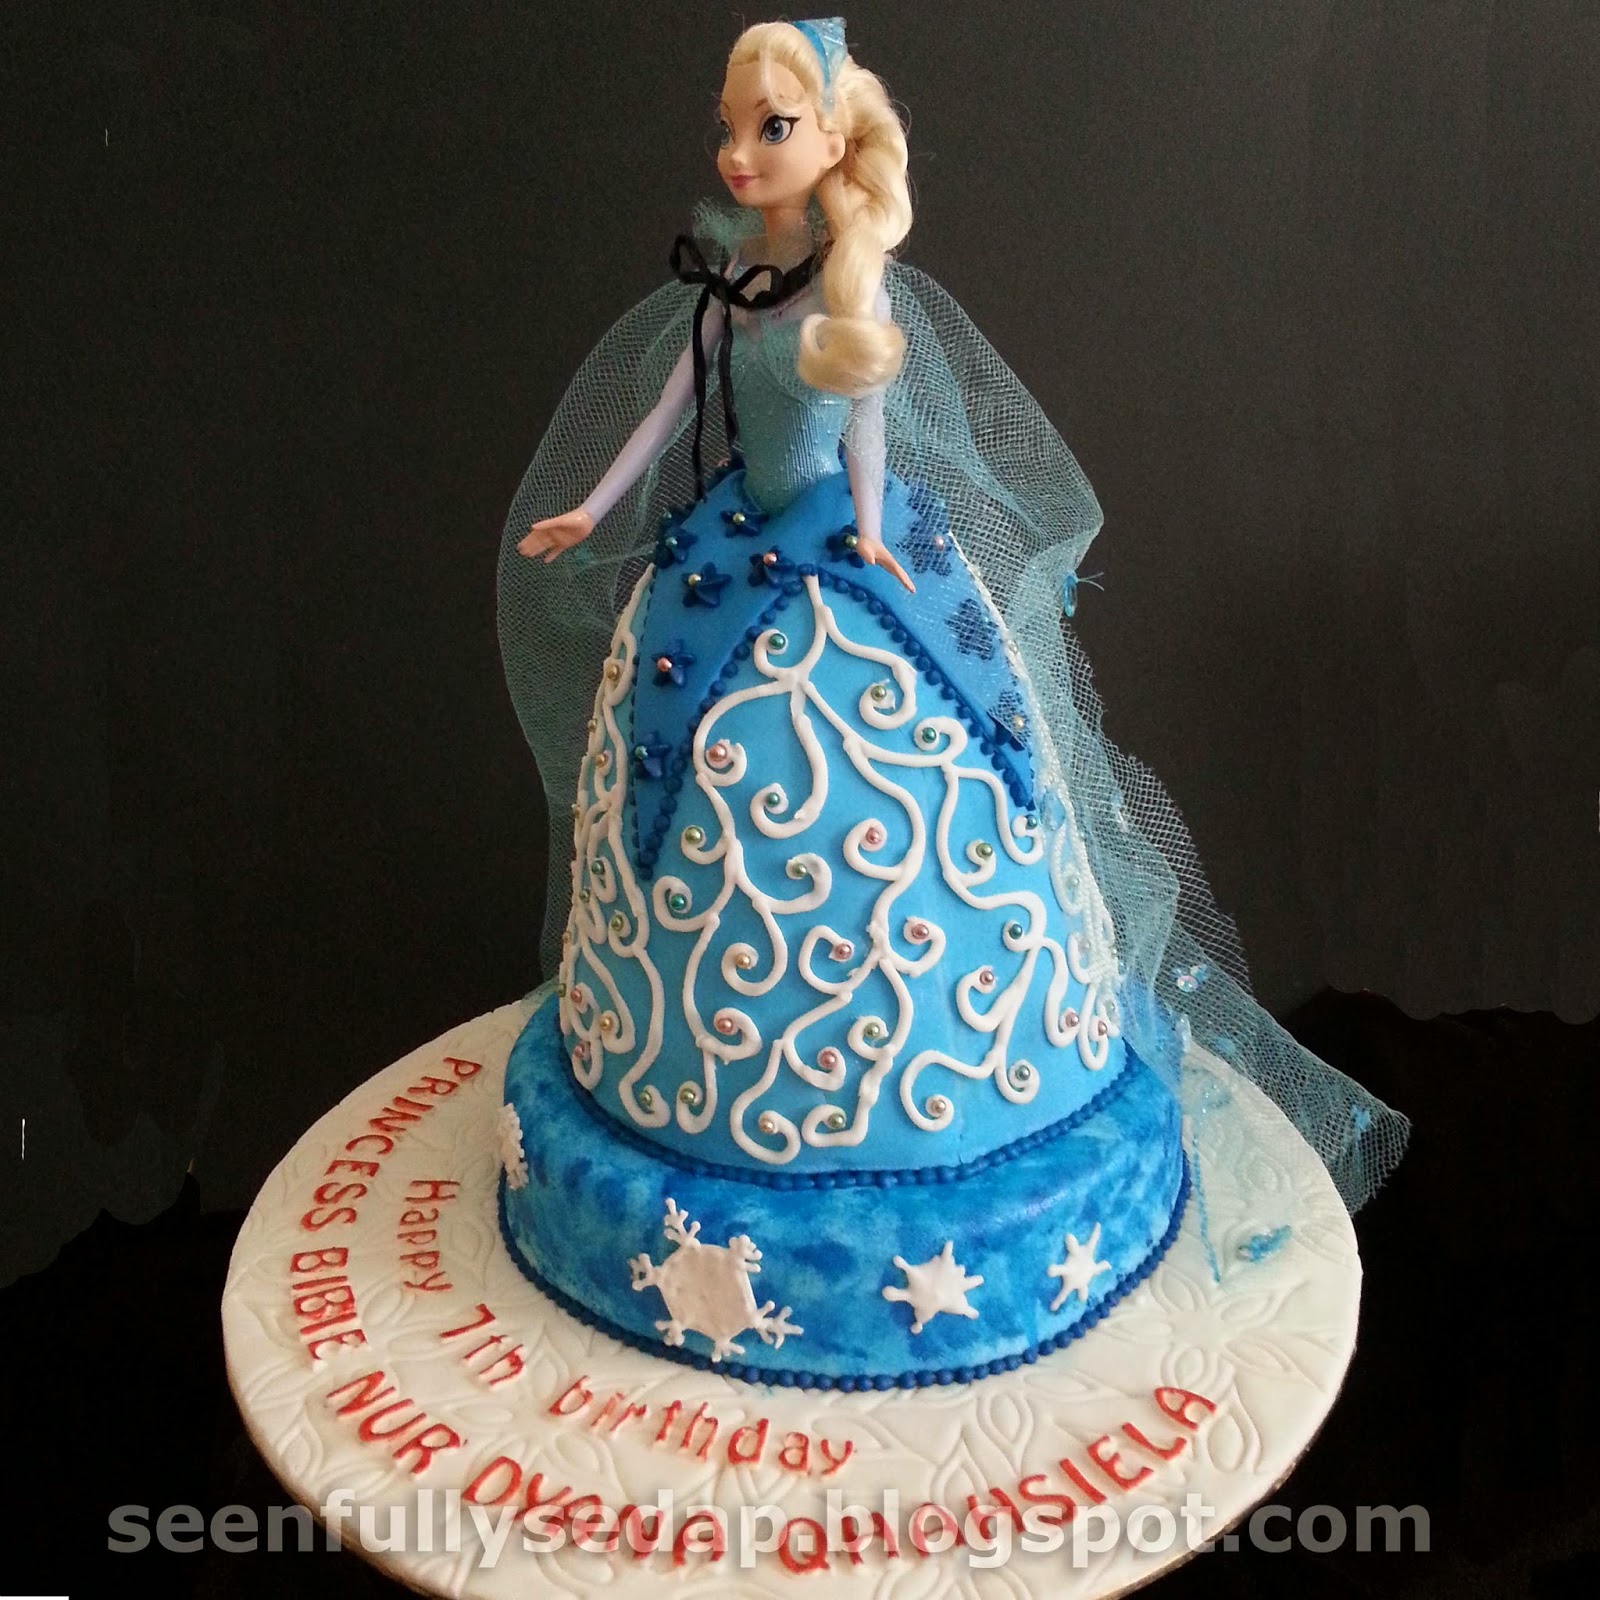 Seenfully Sedap "Frozen" themed birthday party